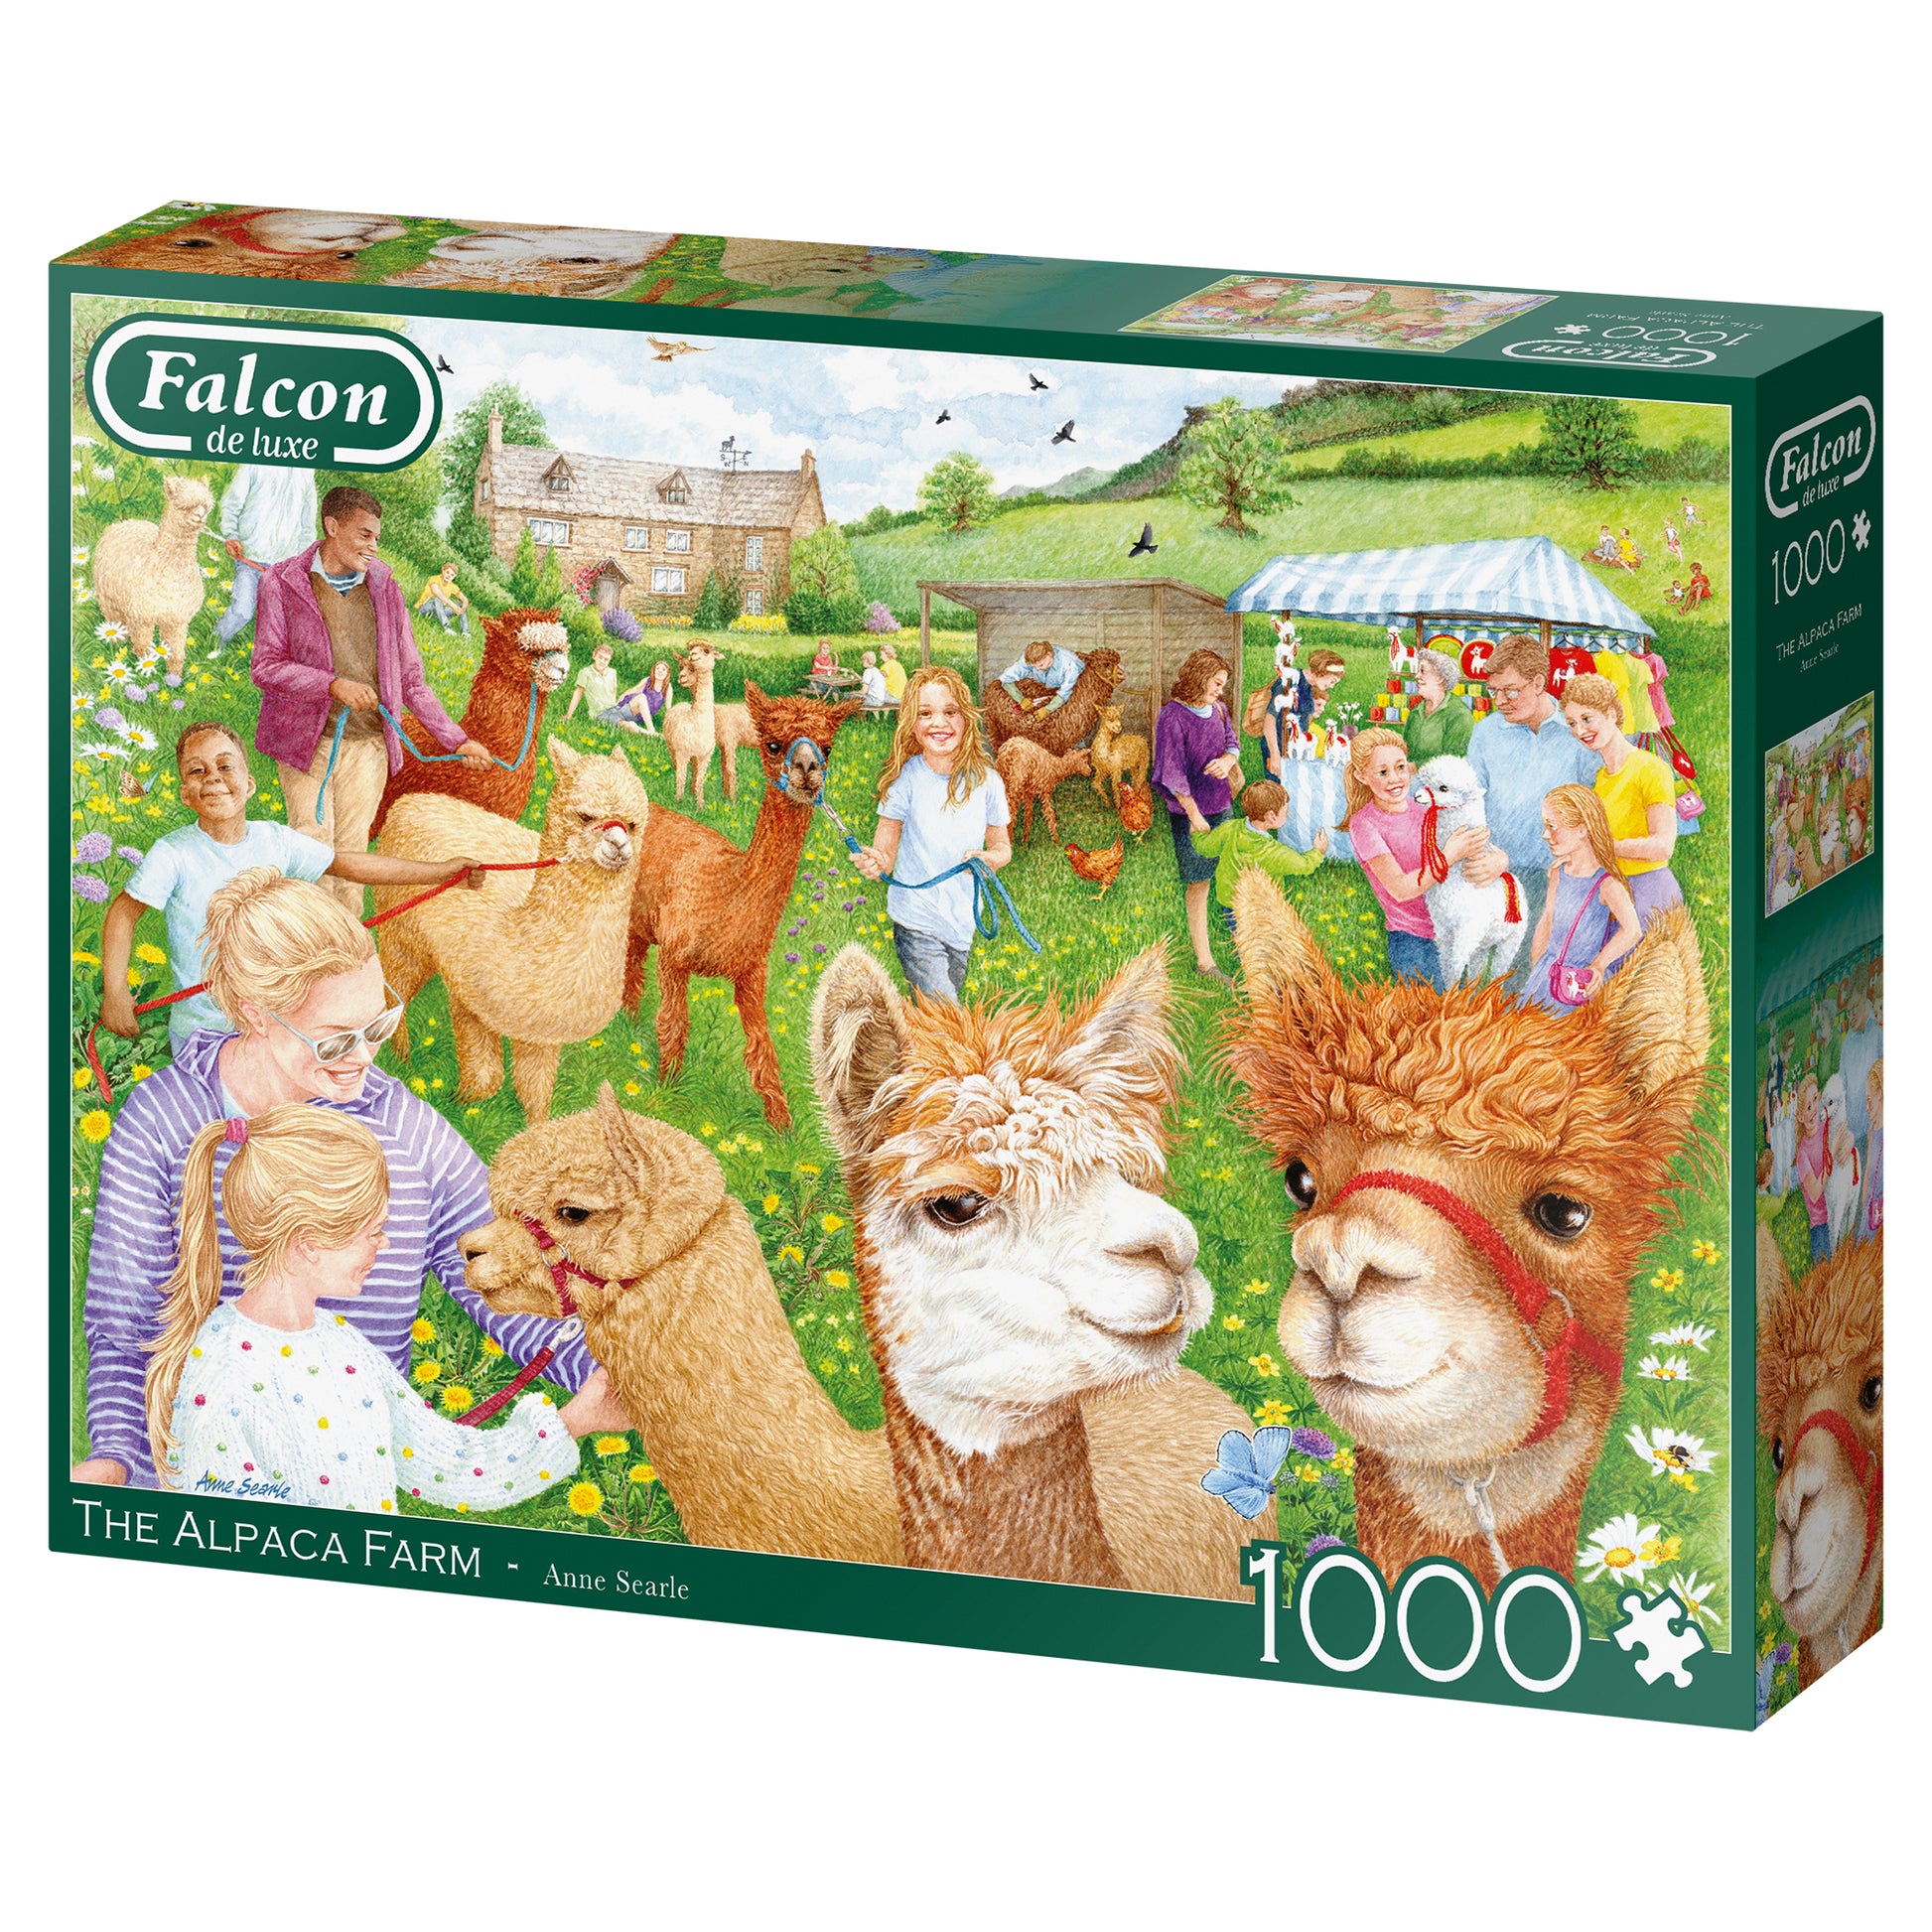 Falcon - The Alpaca Farm (1000 pieces) - product image - Jumboplay.com